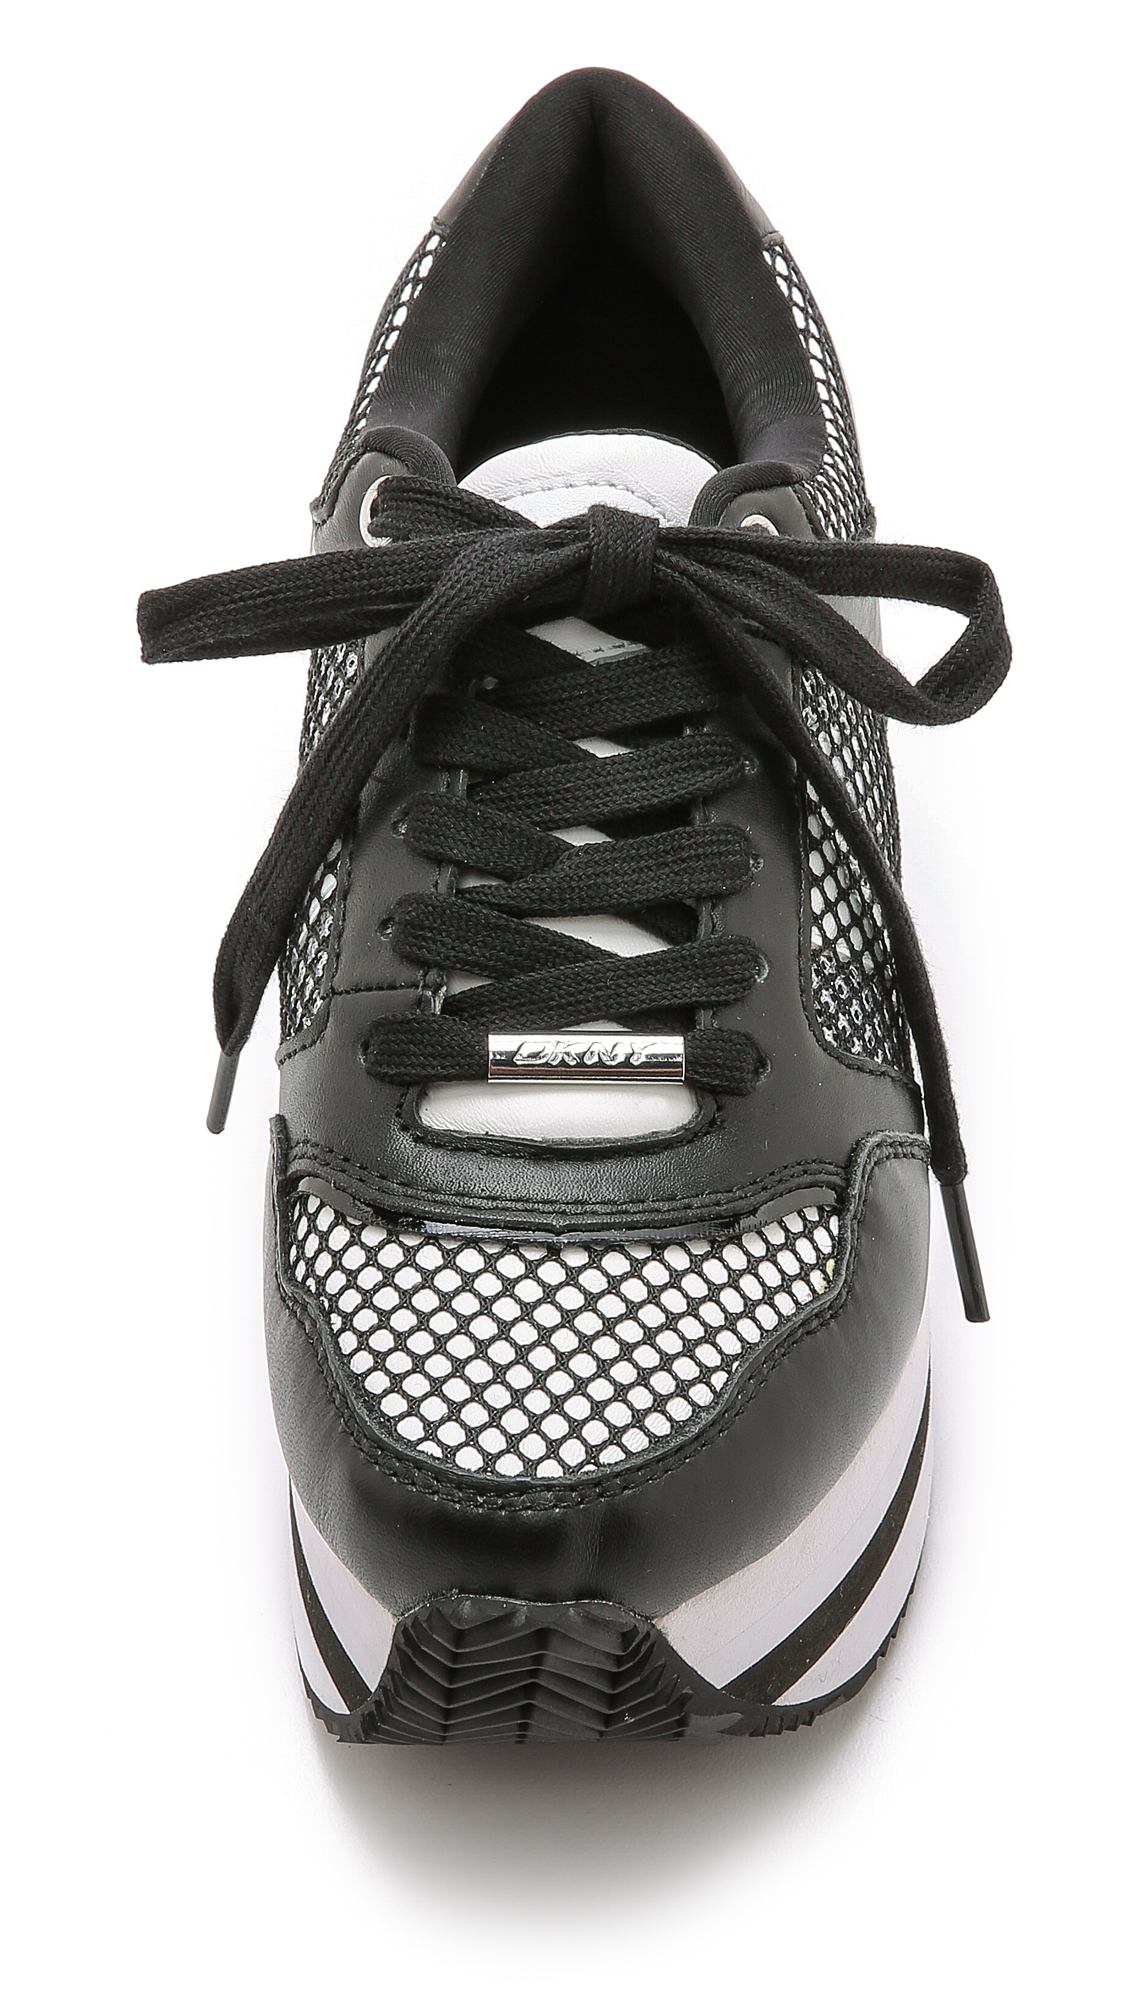 DKNY Jill Platform Sneakers - White/black - Lyst